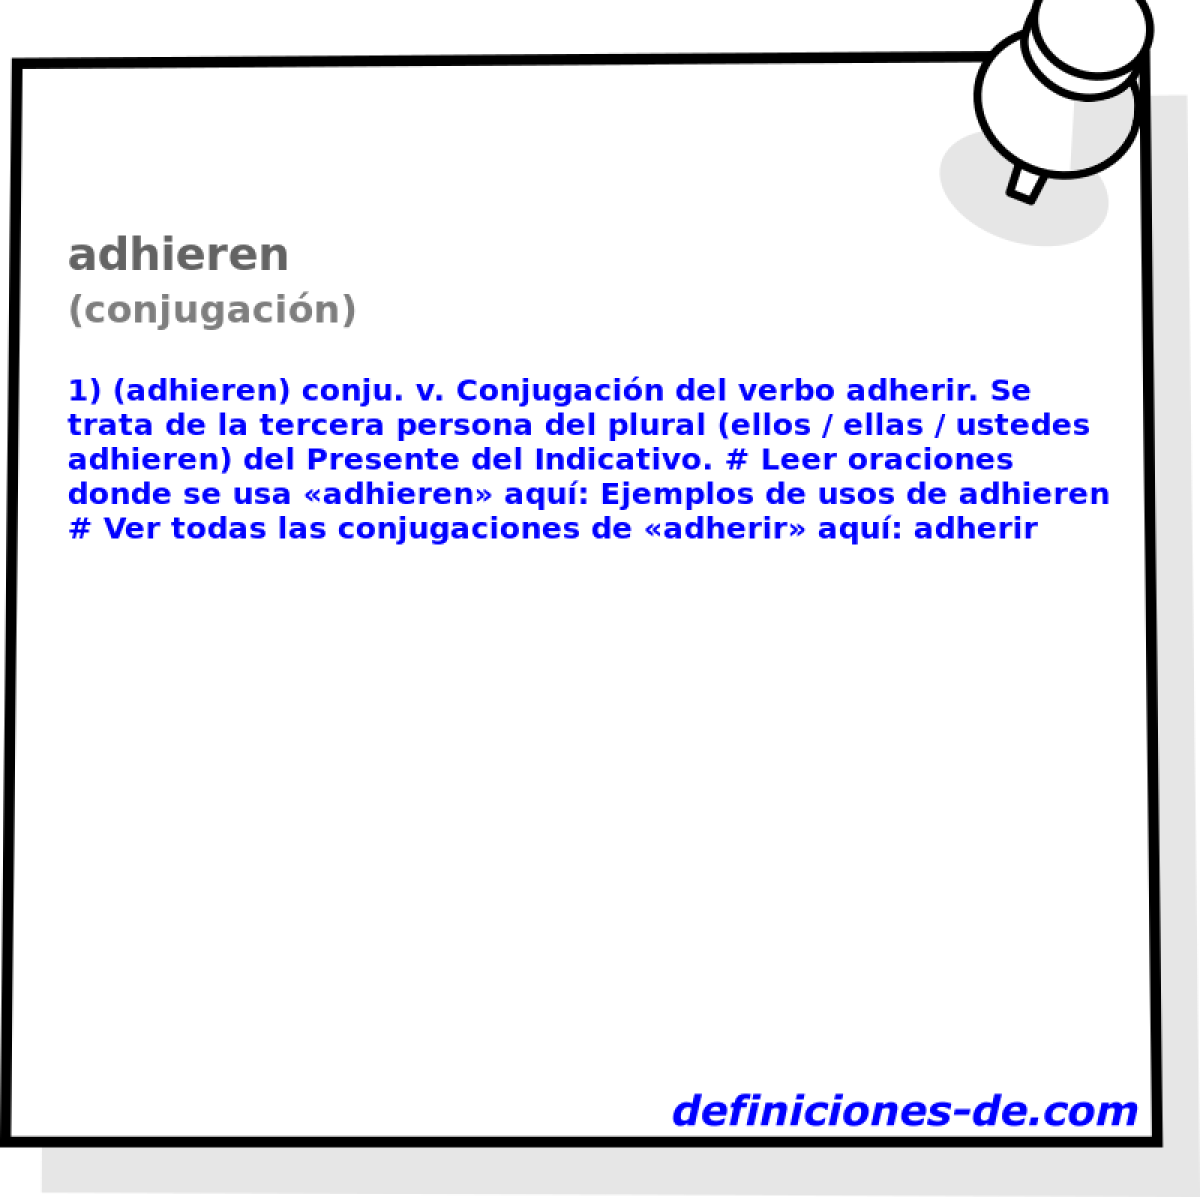 adhieren (conjugacin)